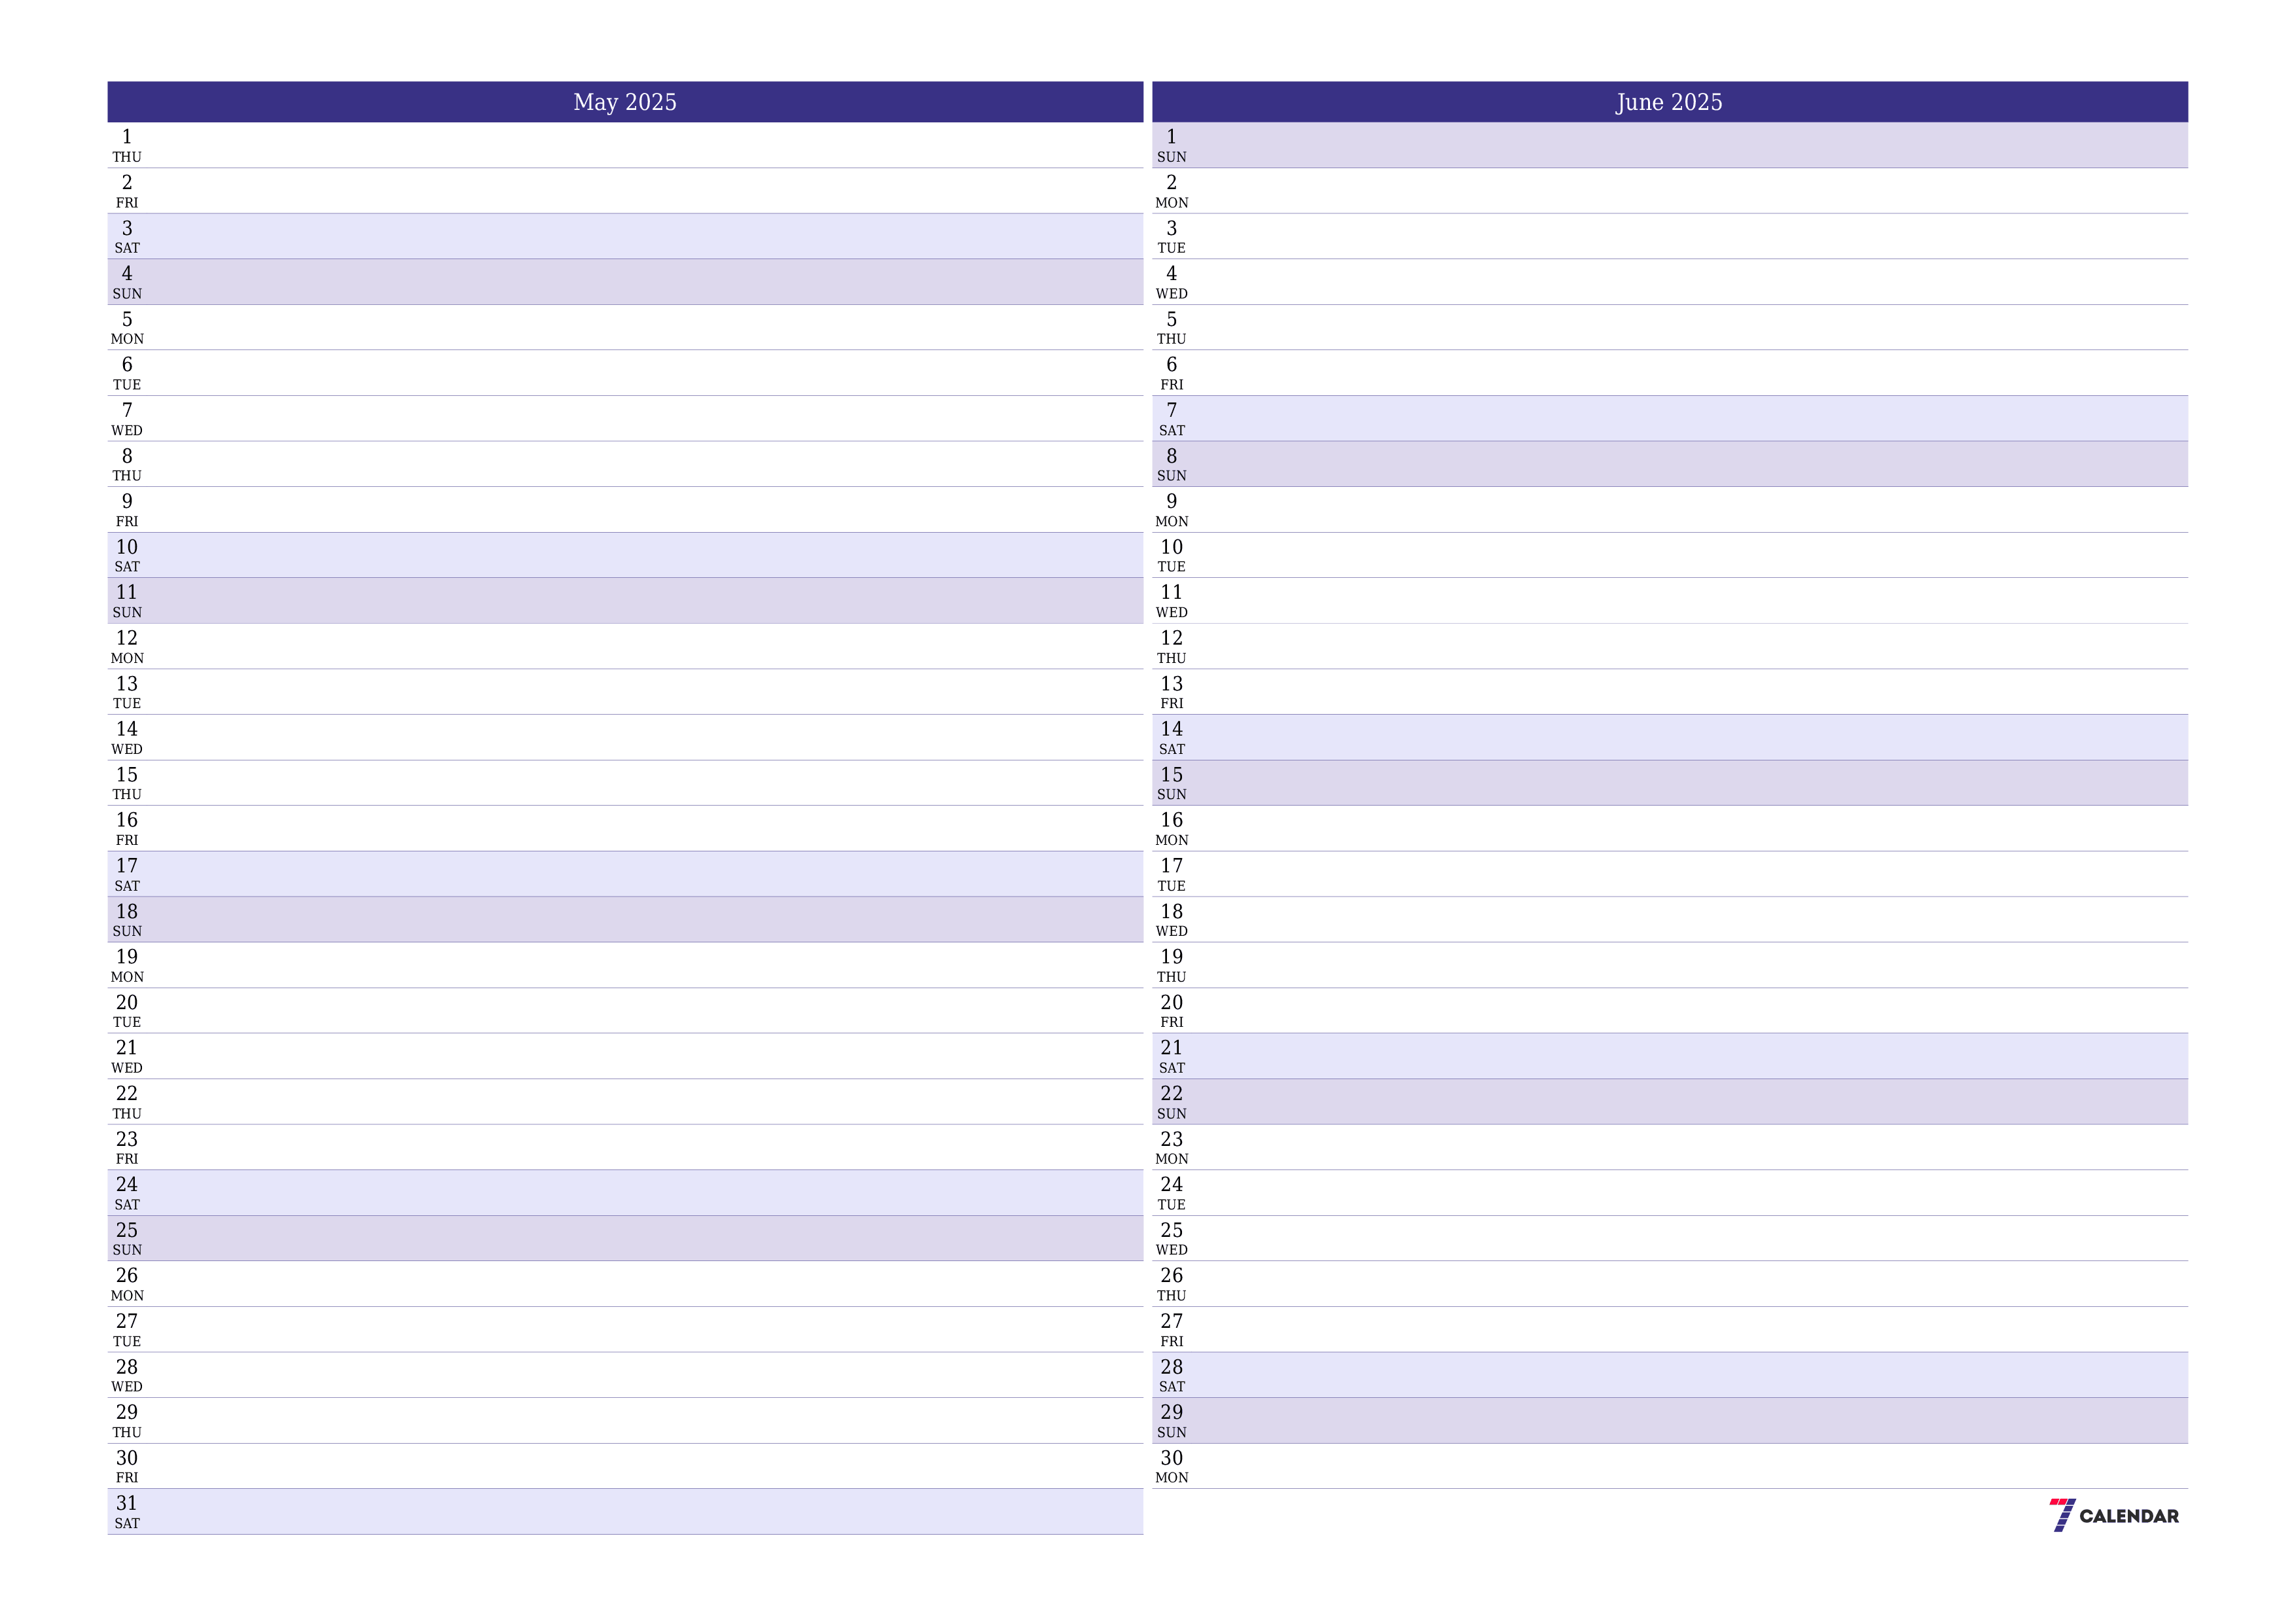 Blank calendar May 2025